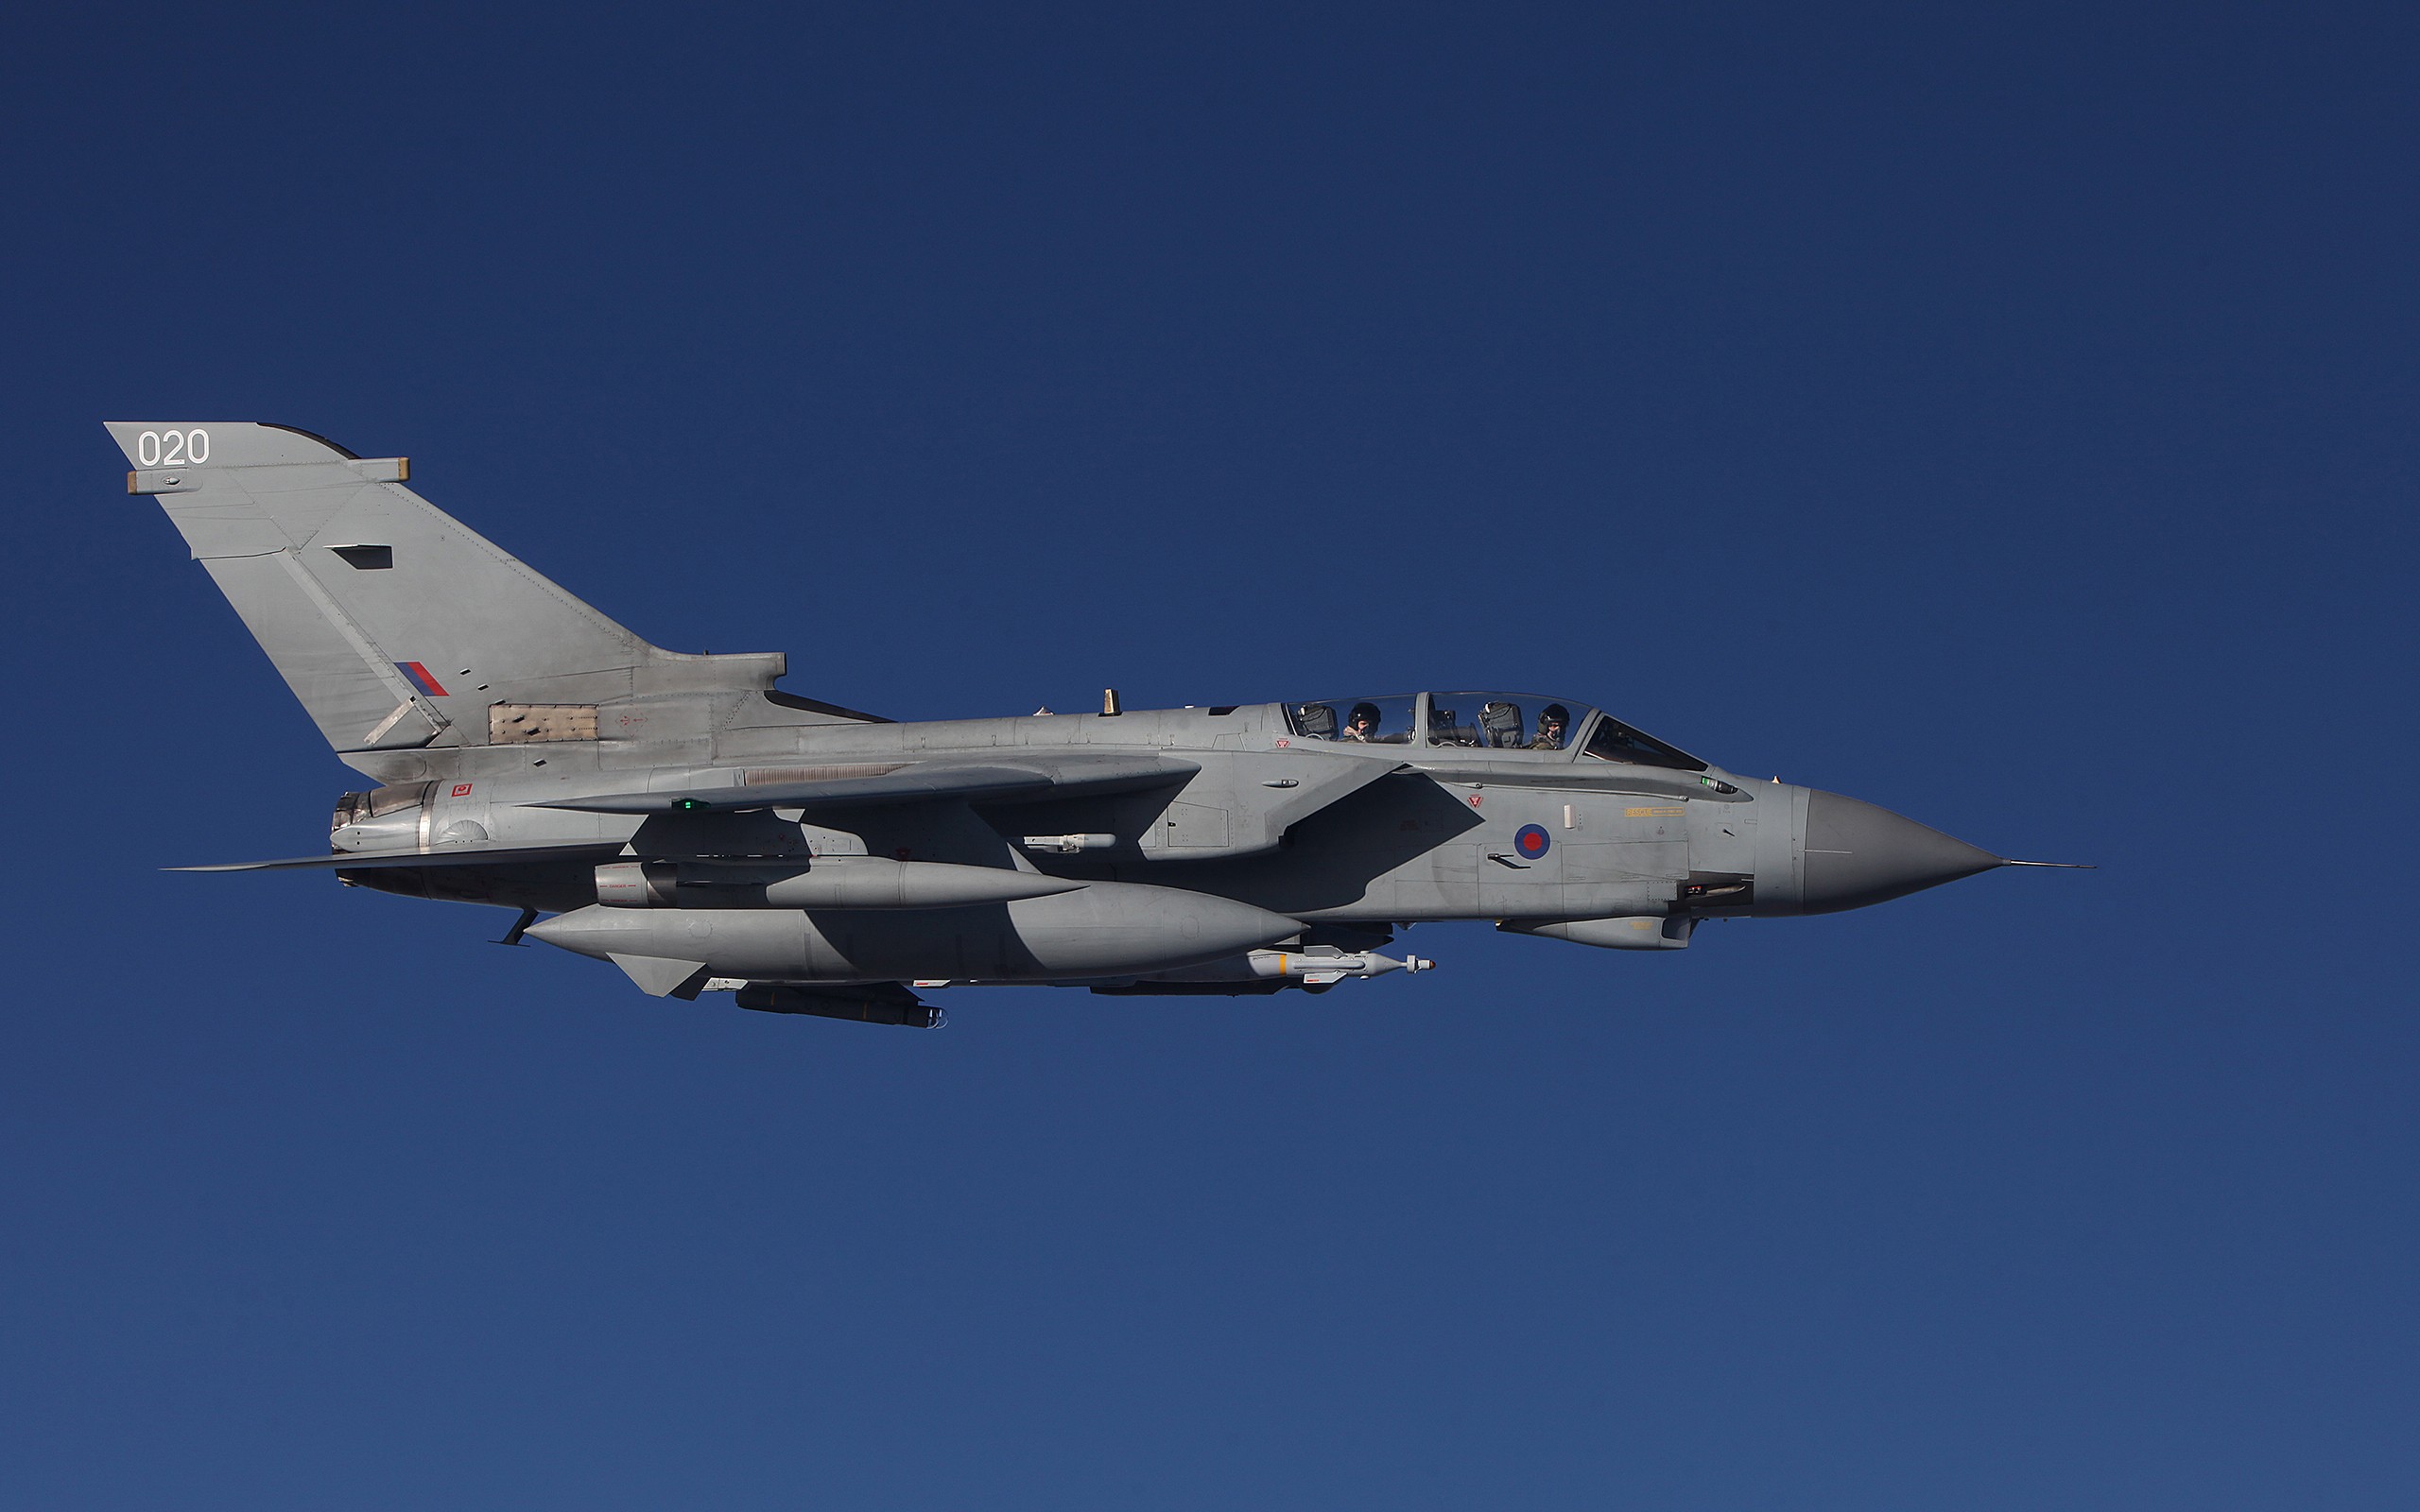 General 2560x1600 Panavia Tornado military aircraft aircraft Royal Air Force military vehicle vehicle military jet fighter sky clear sky